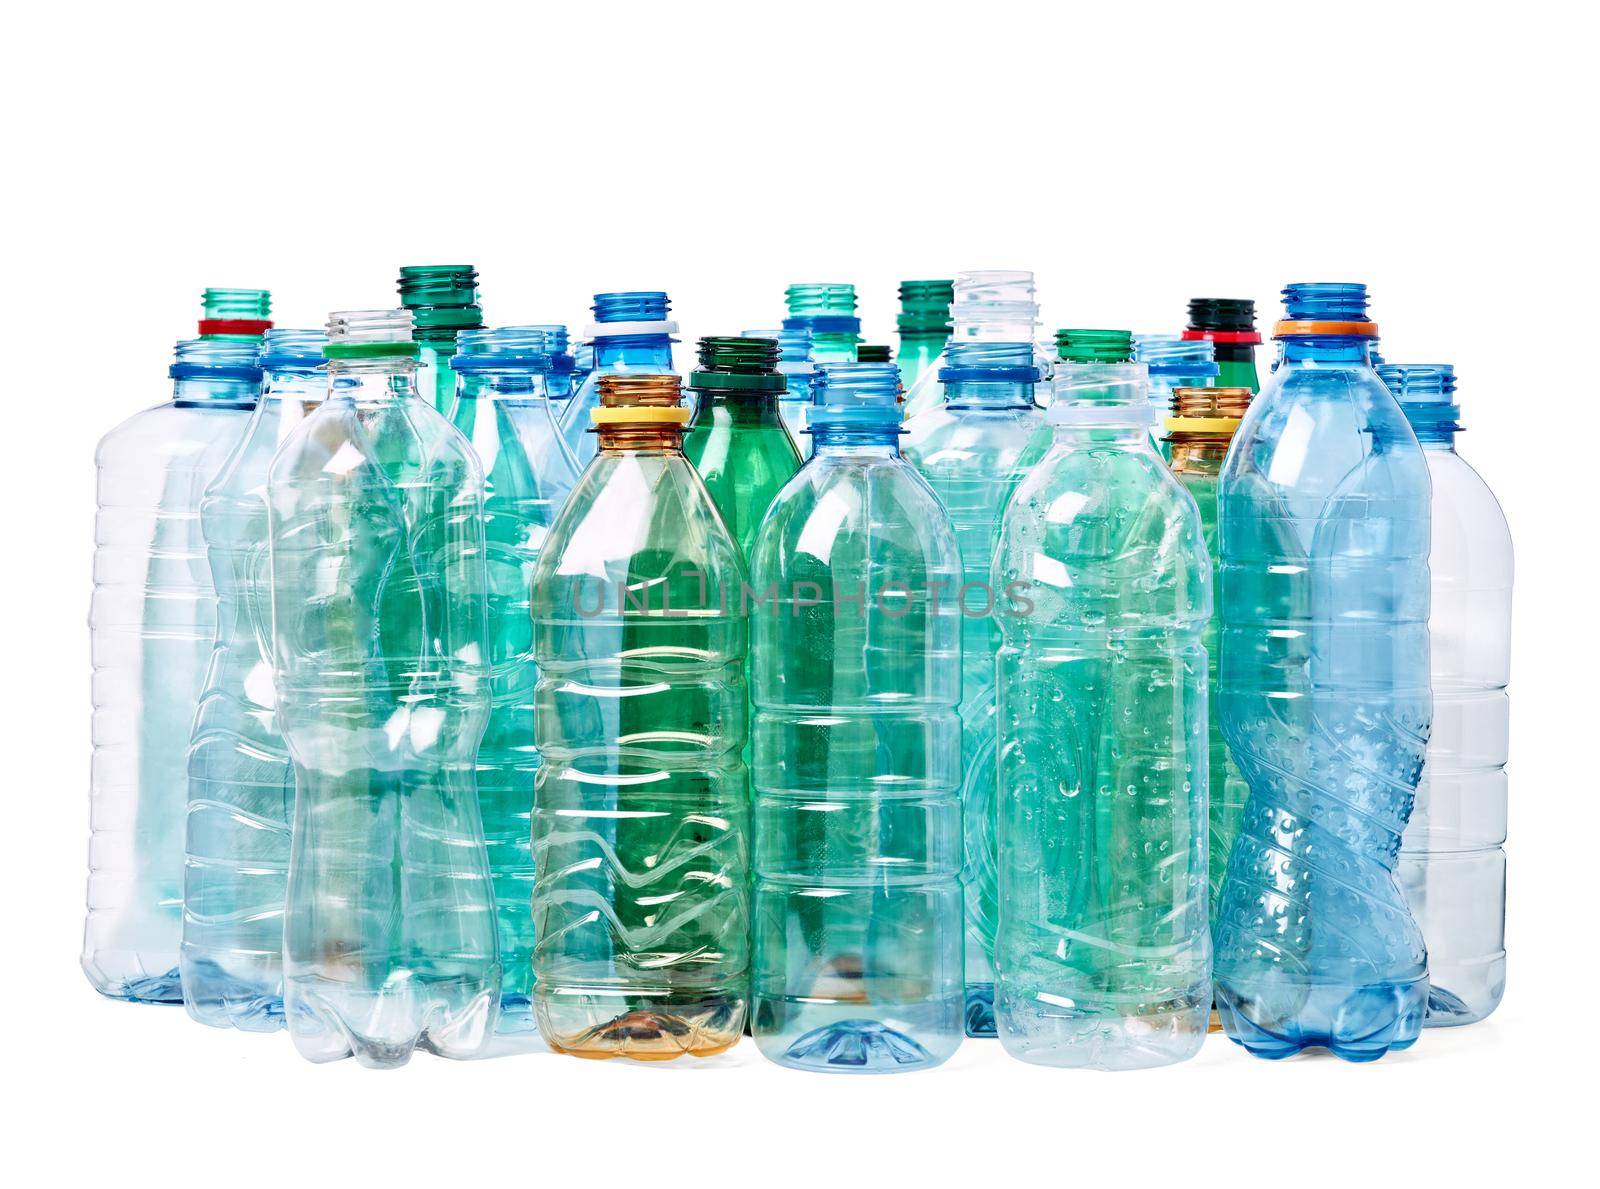 close up of empty plastic bottles